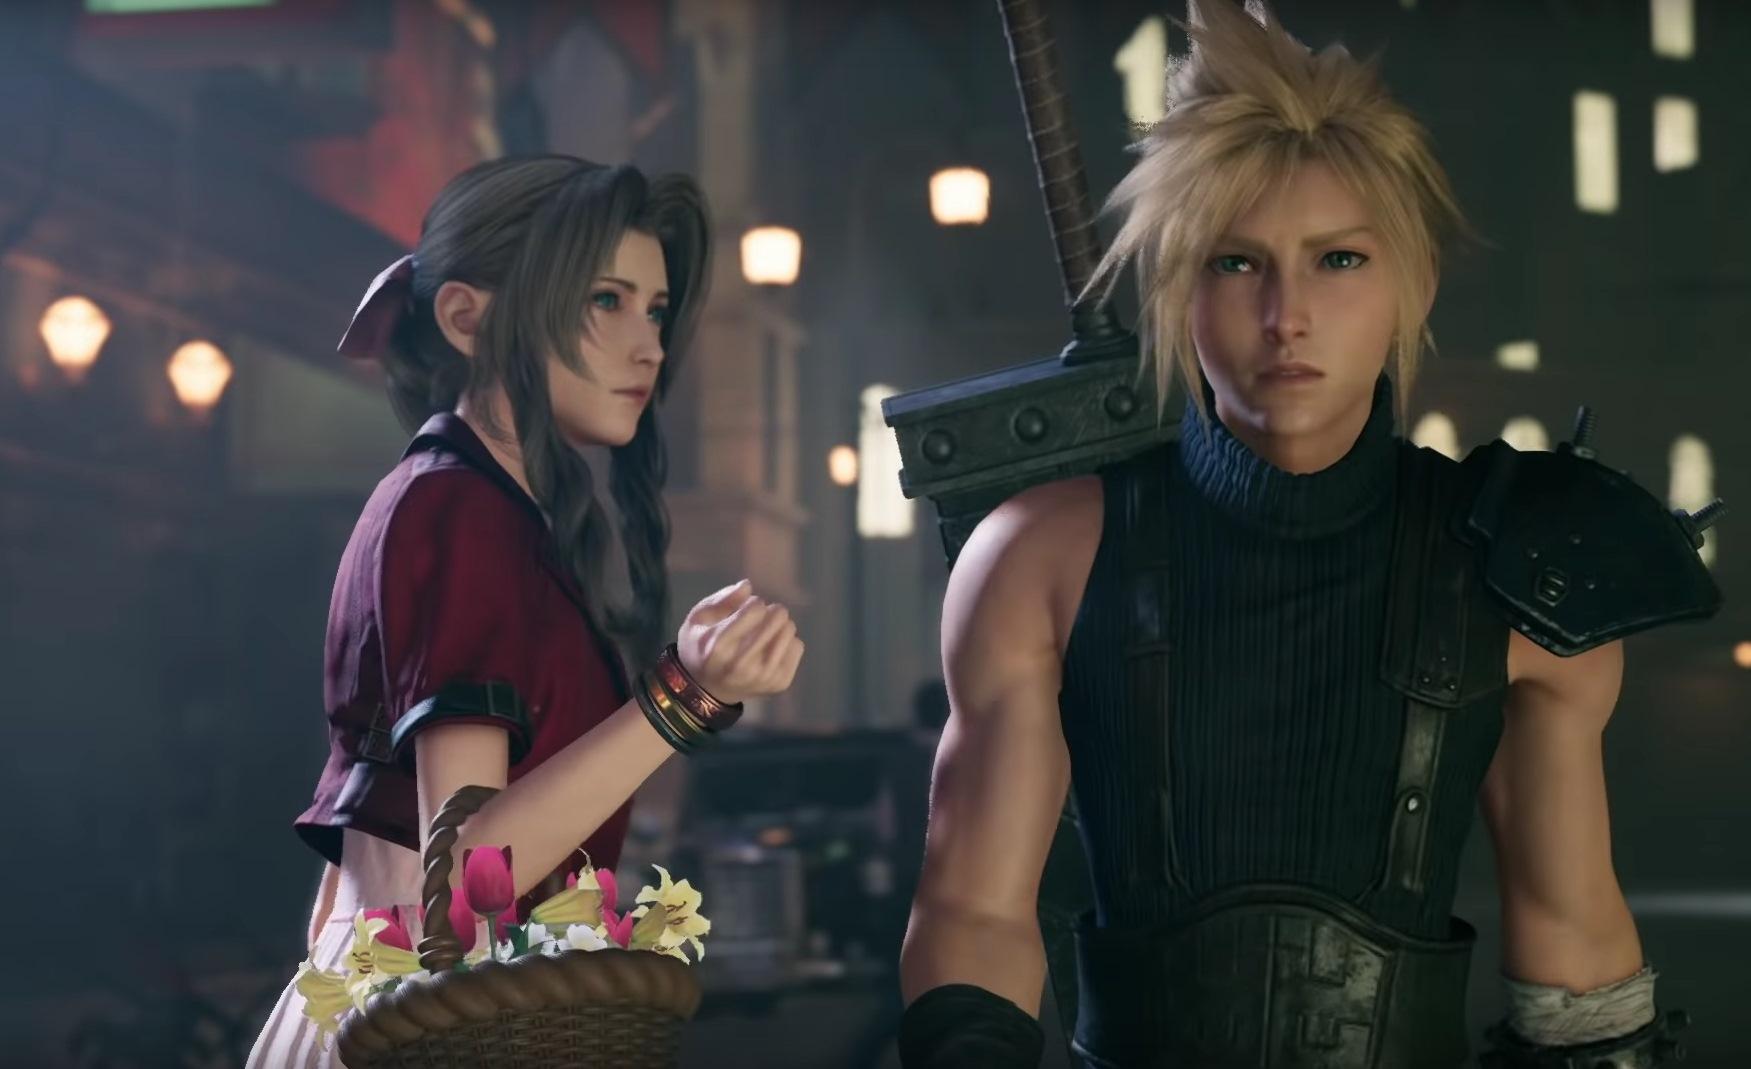 Final Fantasy VII Remake trailer shows redo of the classic